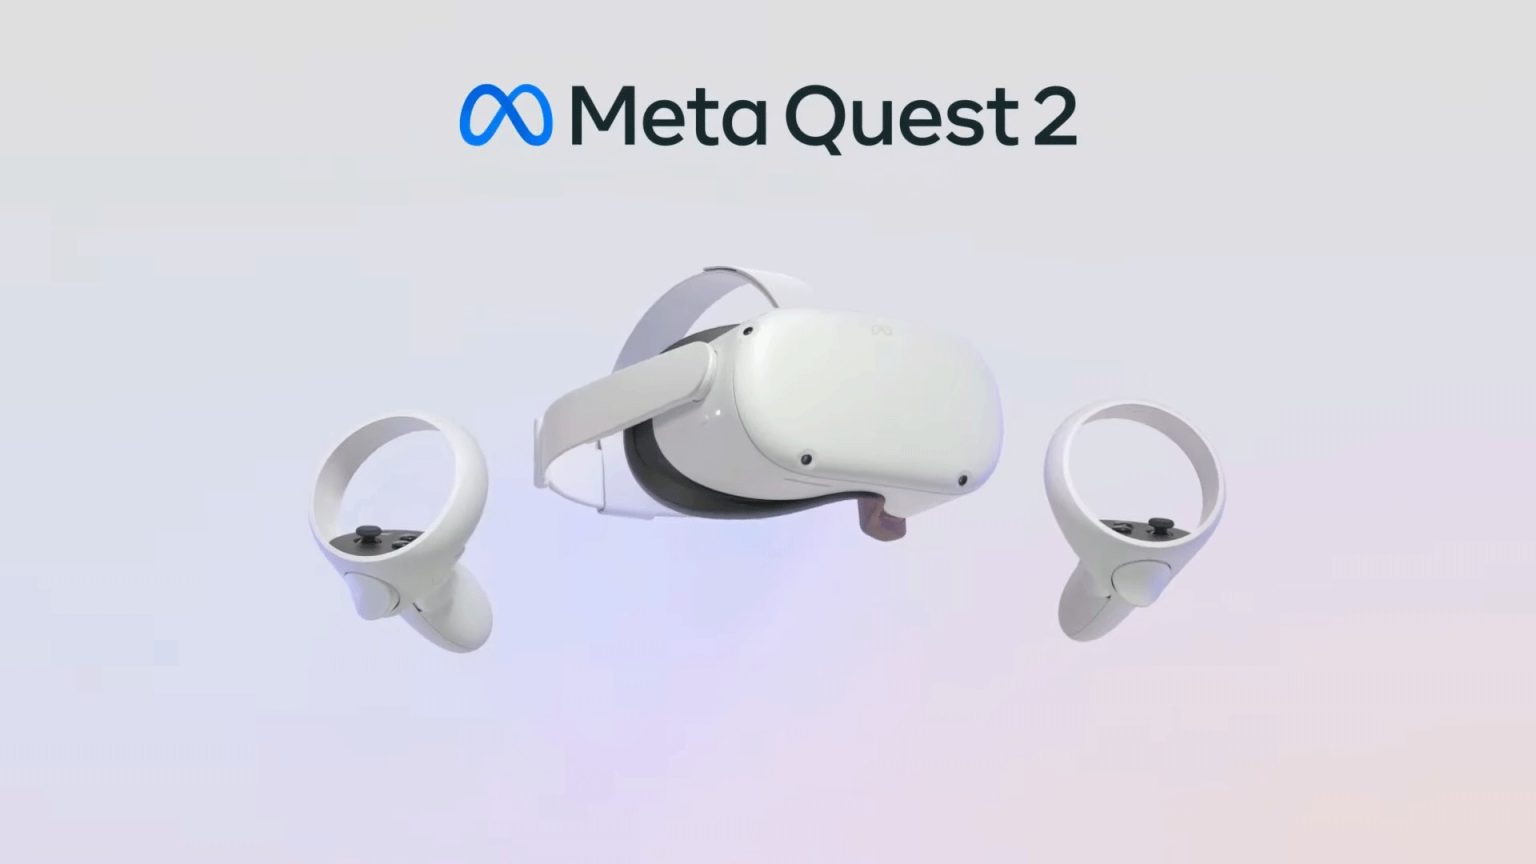 HTCڿһVR豸 ԶԿMeta Quest 2